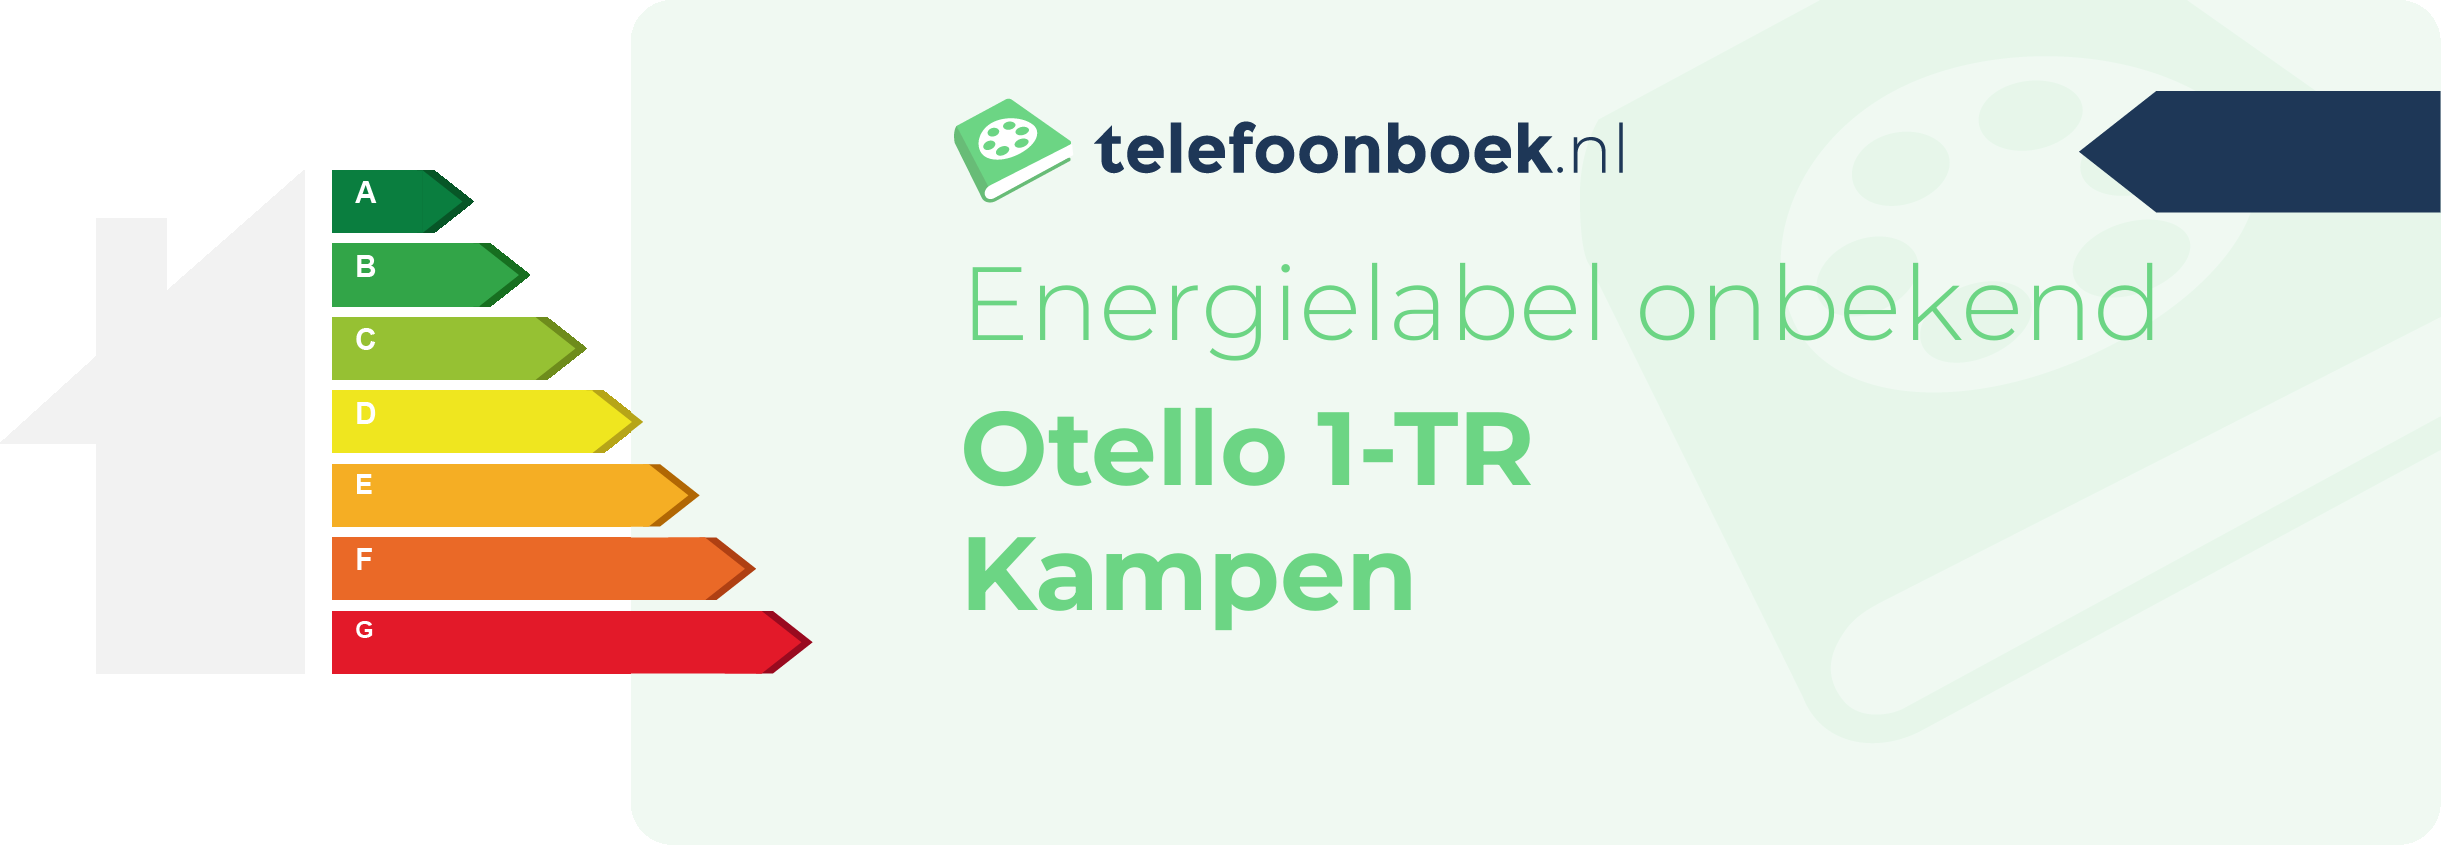 Energielabel Otello 1-TR Kampen